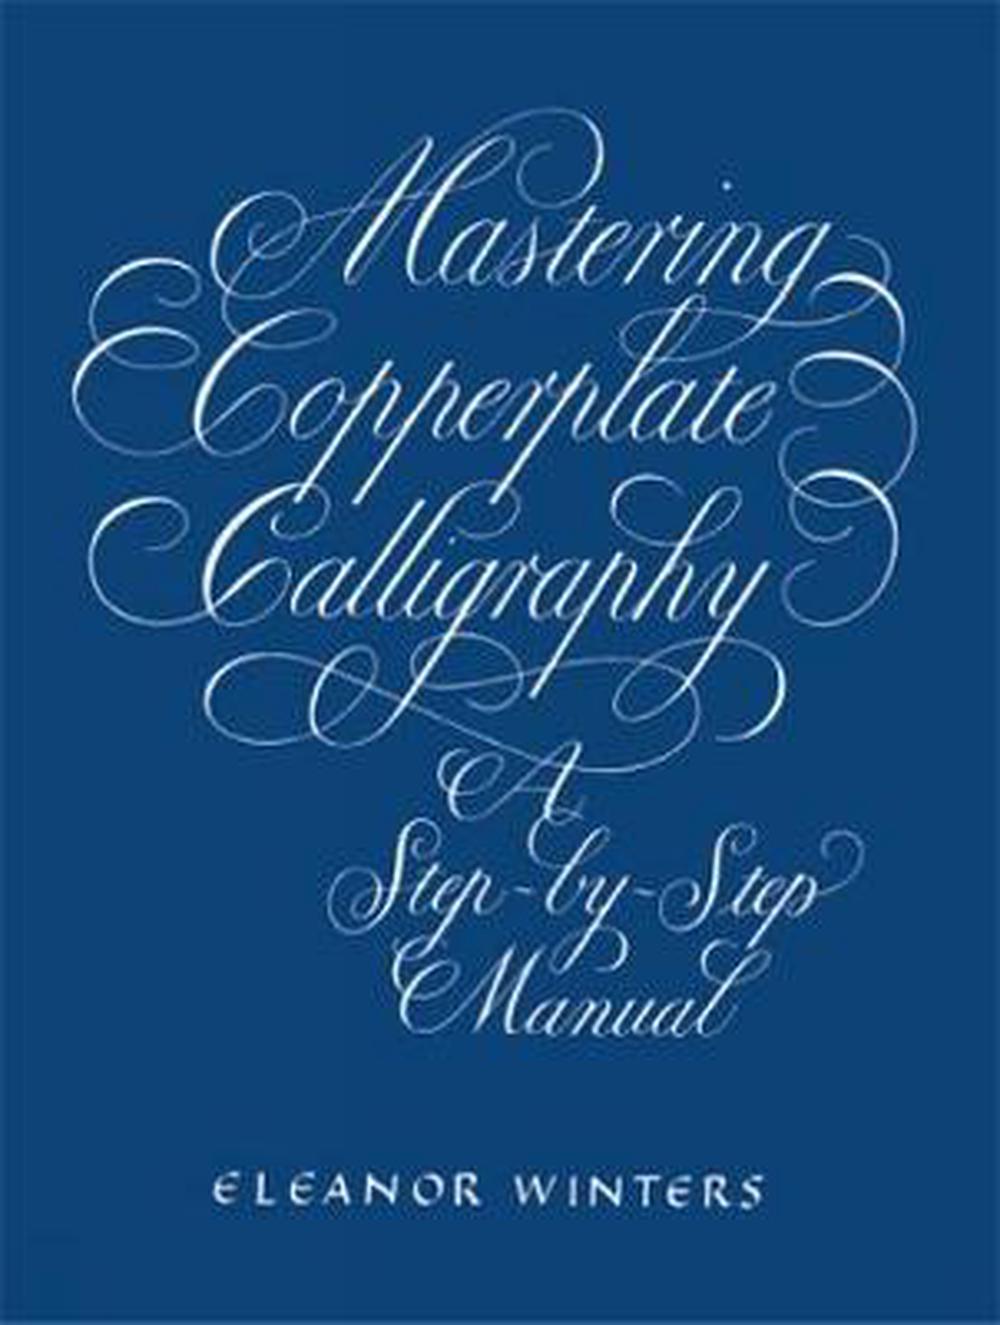 Learn American Calligraphy